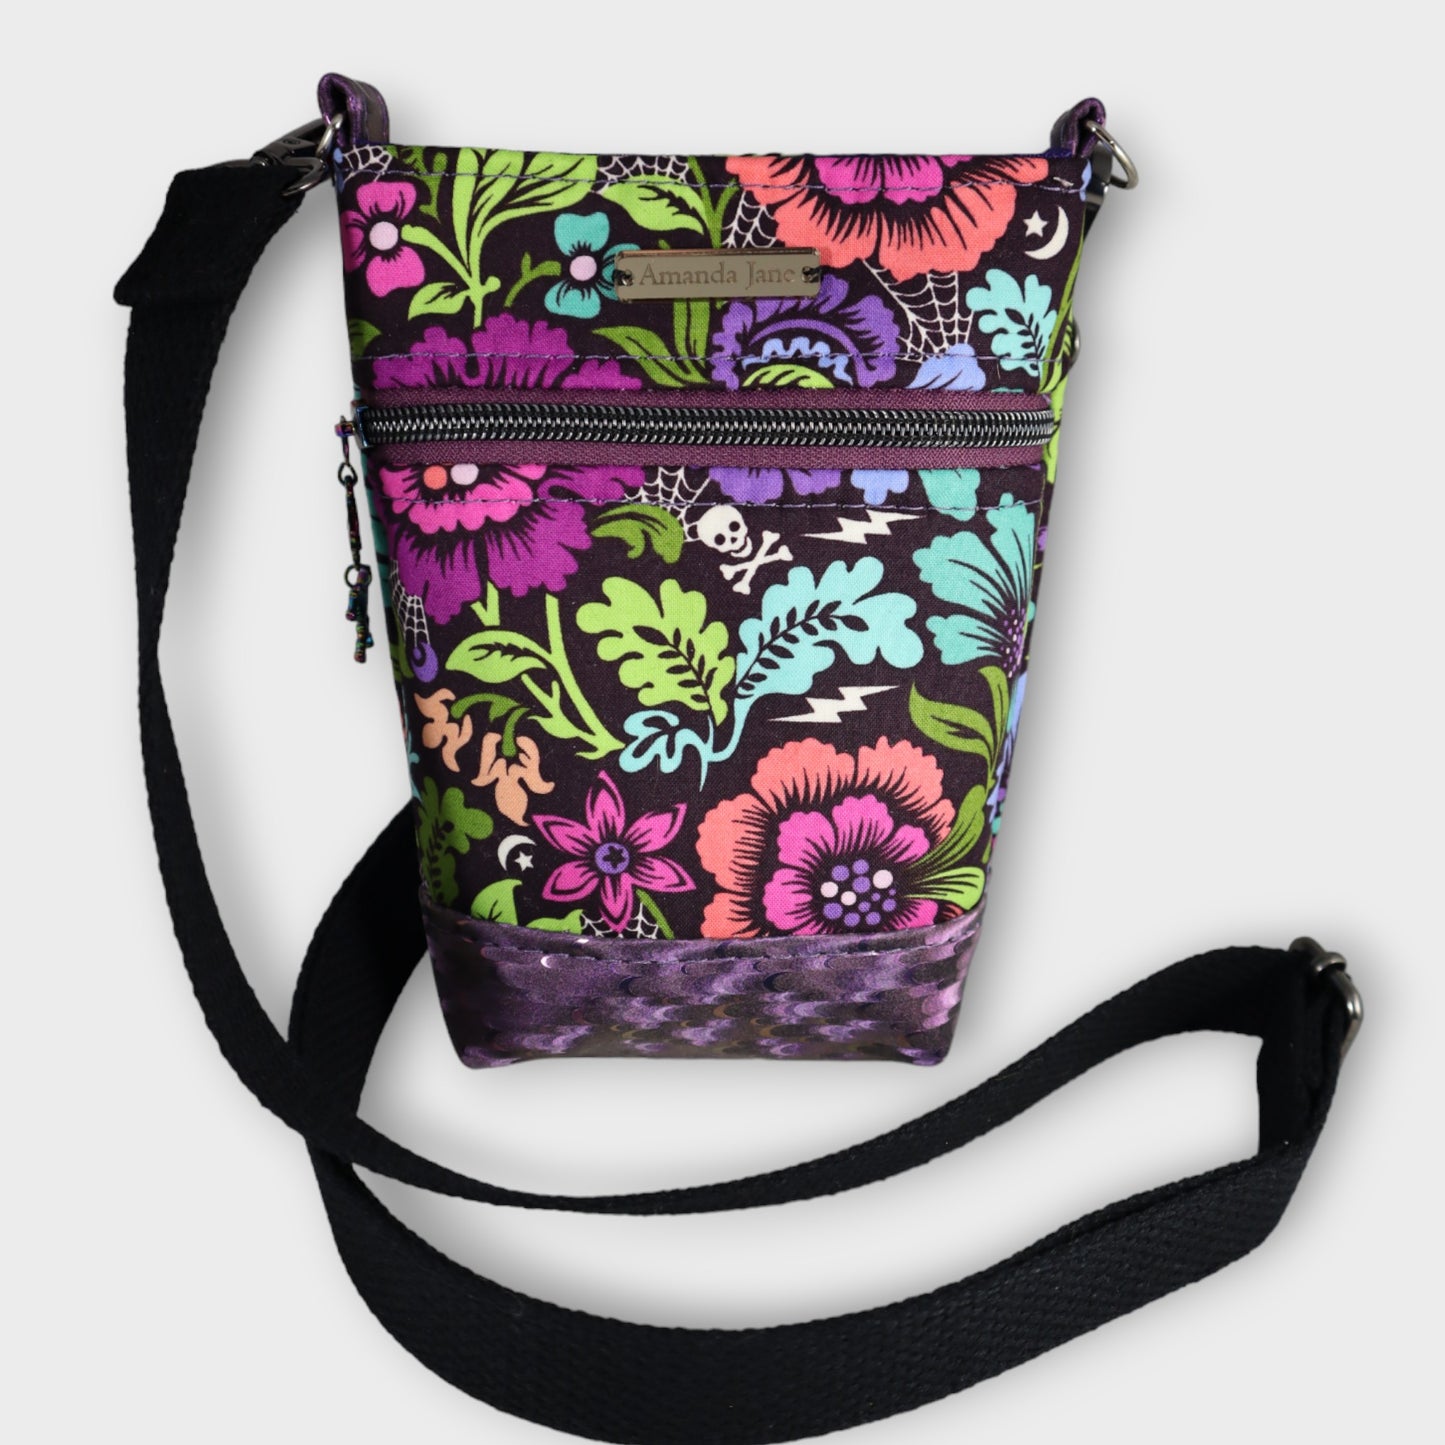 Handcrafted bag handbag small cell phone purse floral skulls